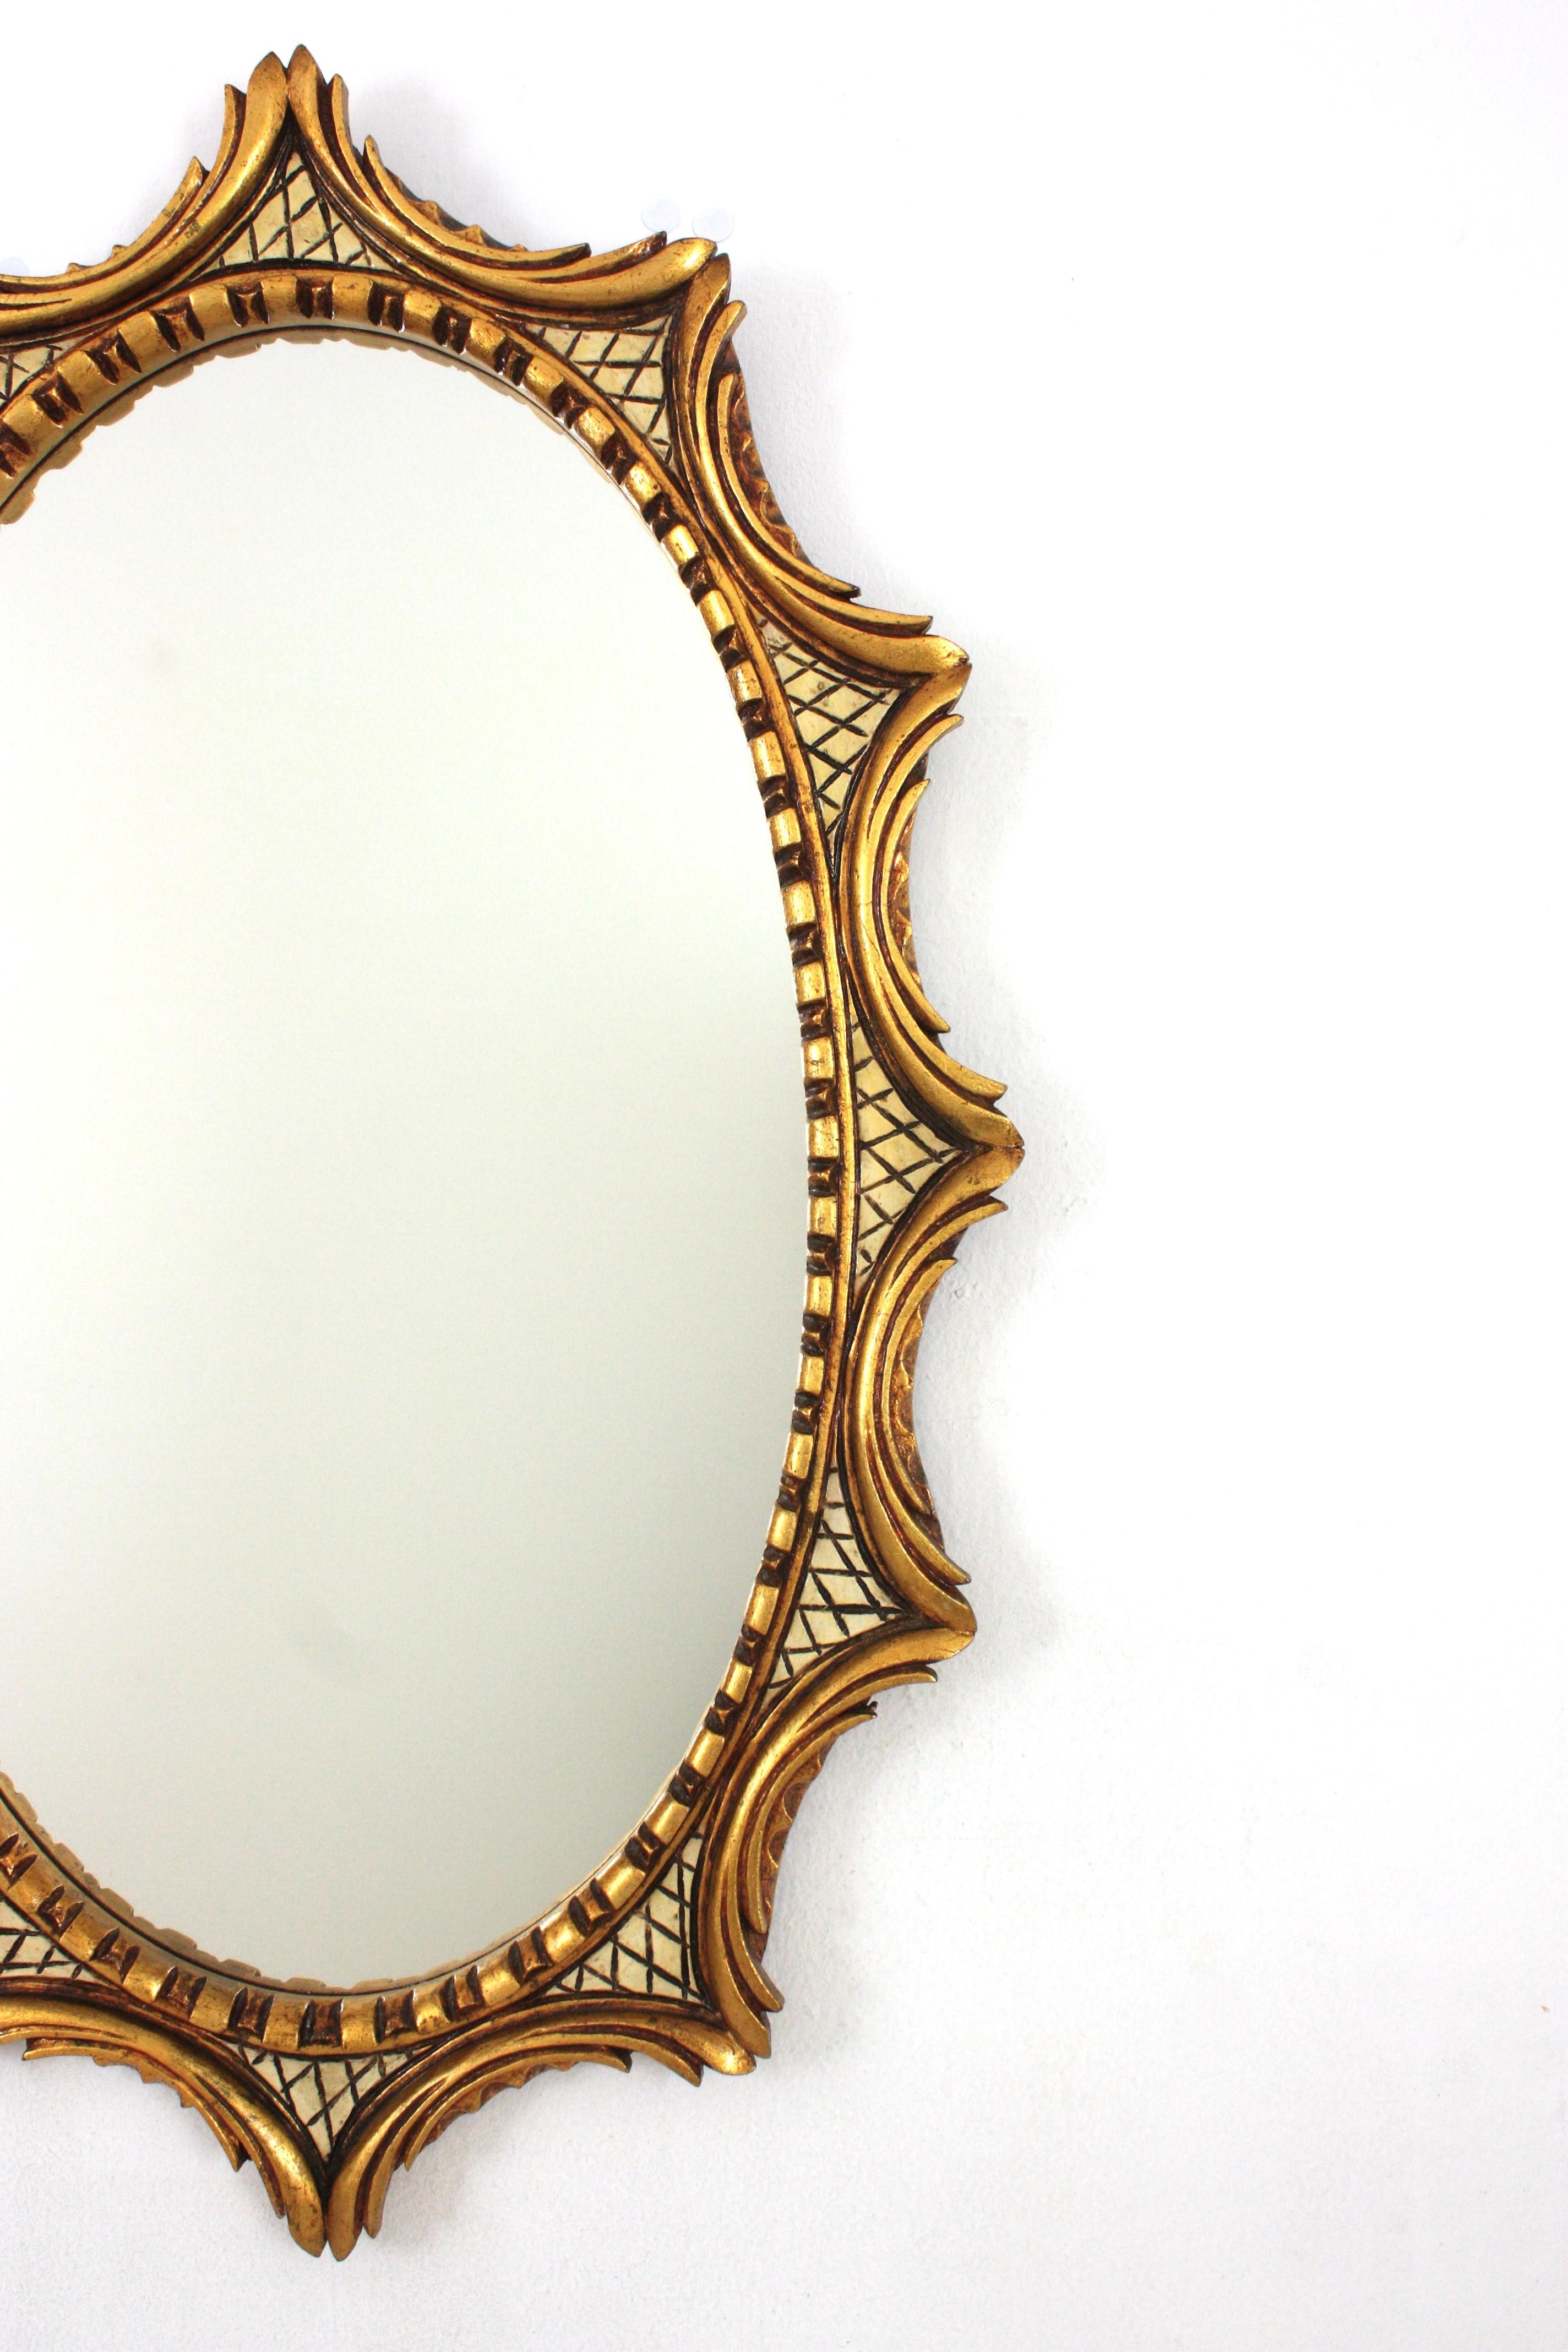 Spanish Sunburst Oval Mirror in Gilt & Beige Carved Wood For Sale 2